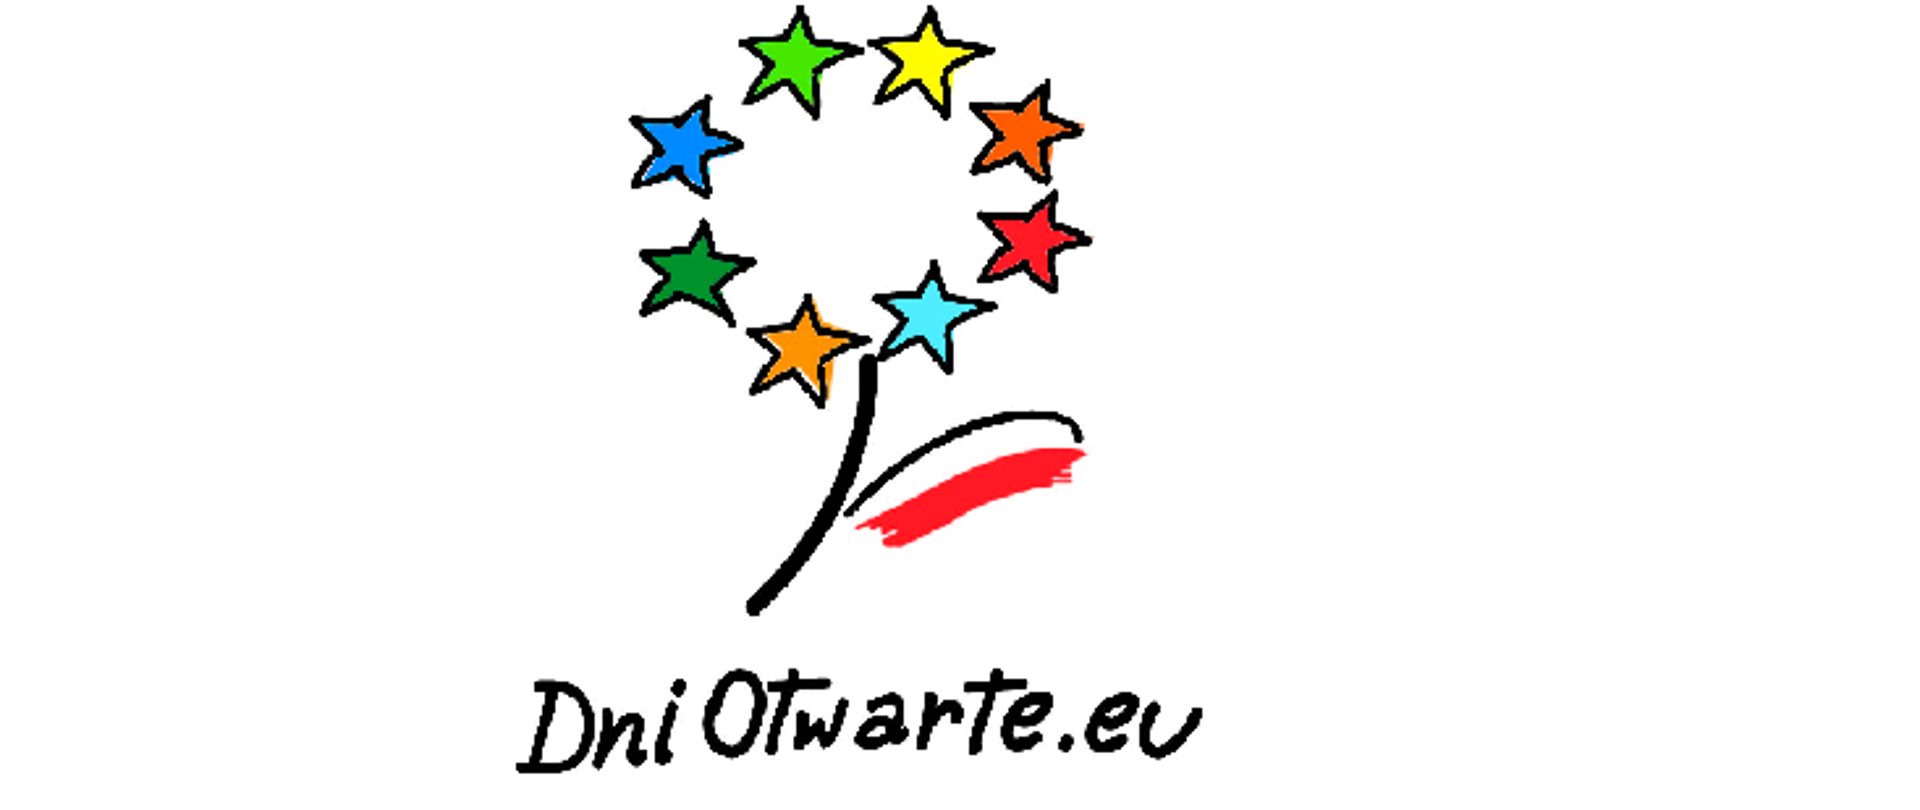 logo dni otwartych eu